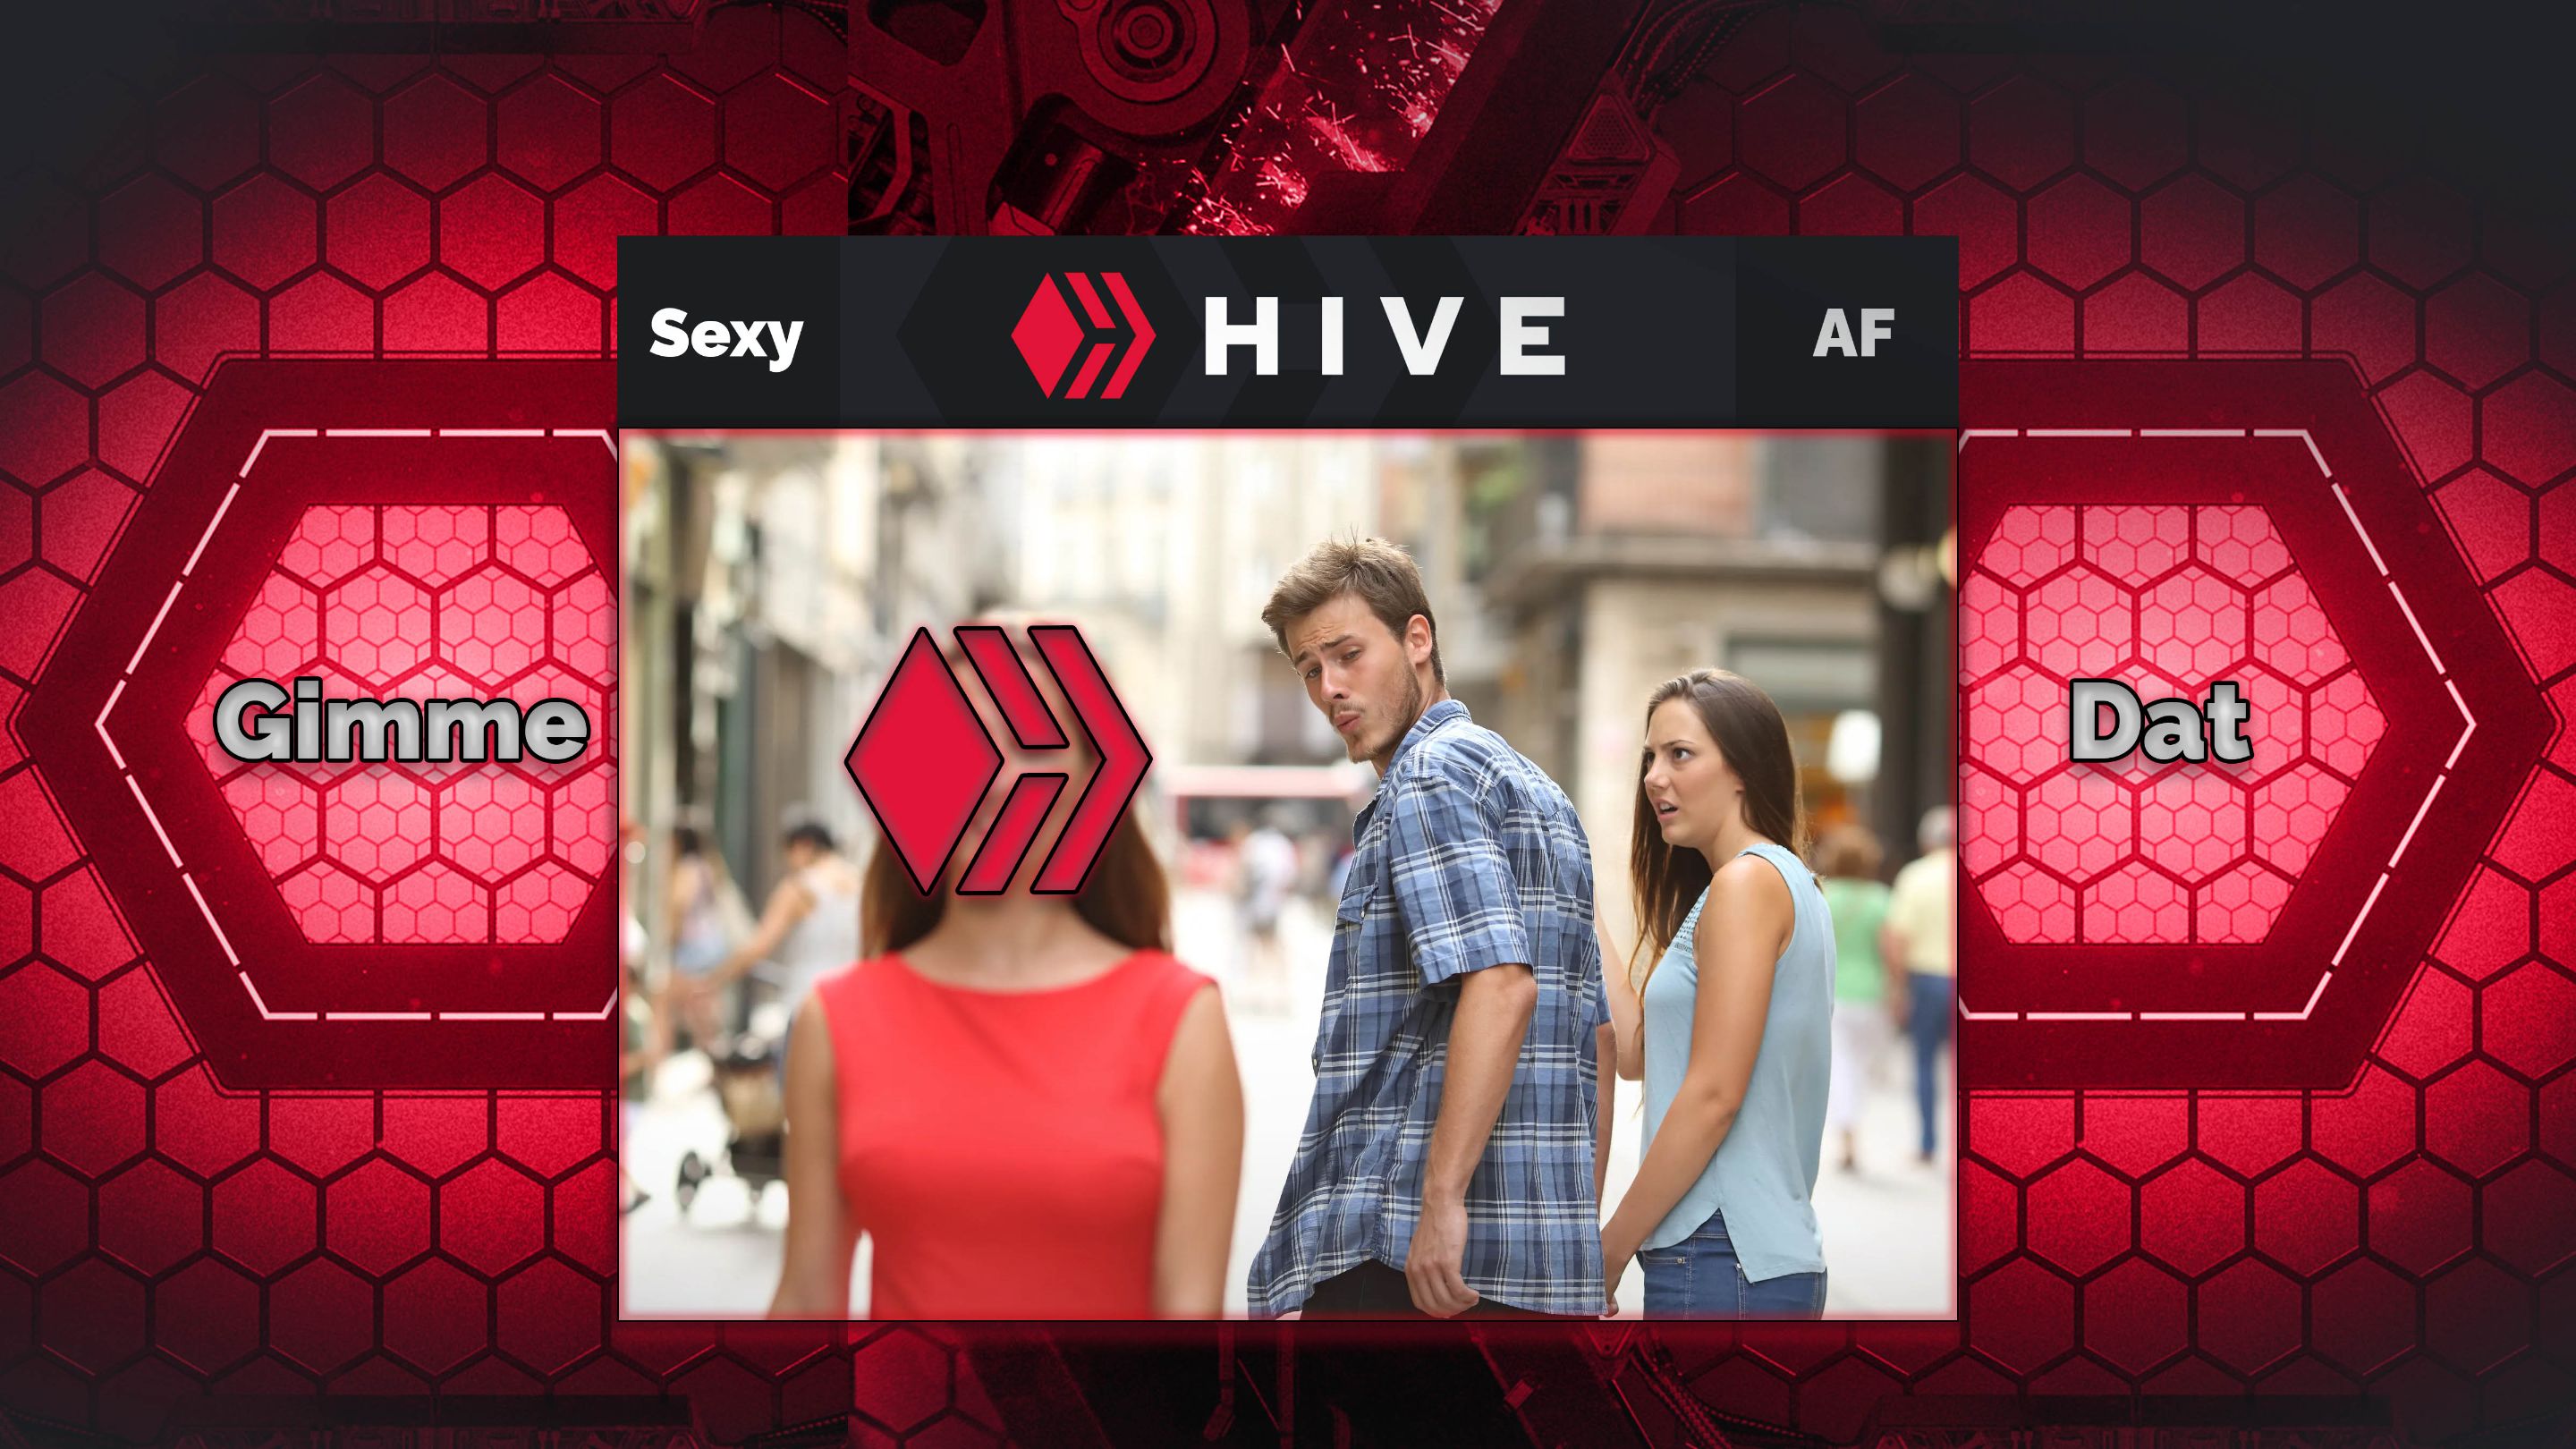 Hive is Sexy Thumbnail.jpg